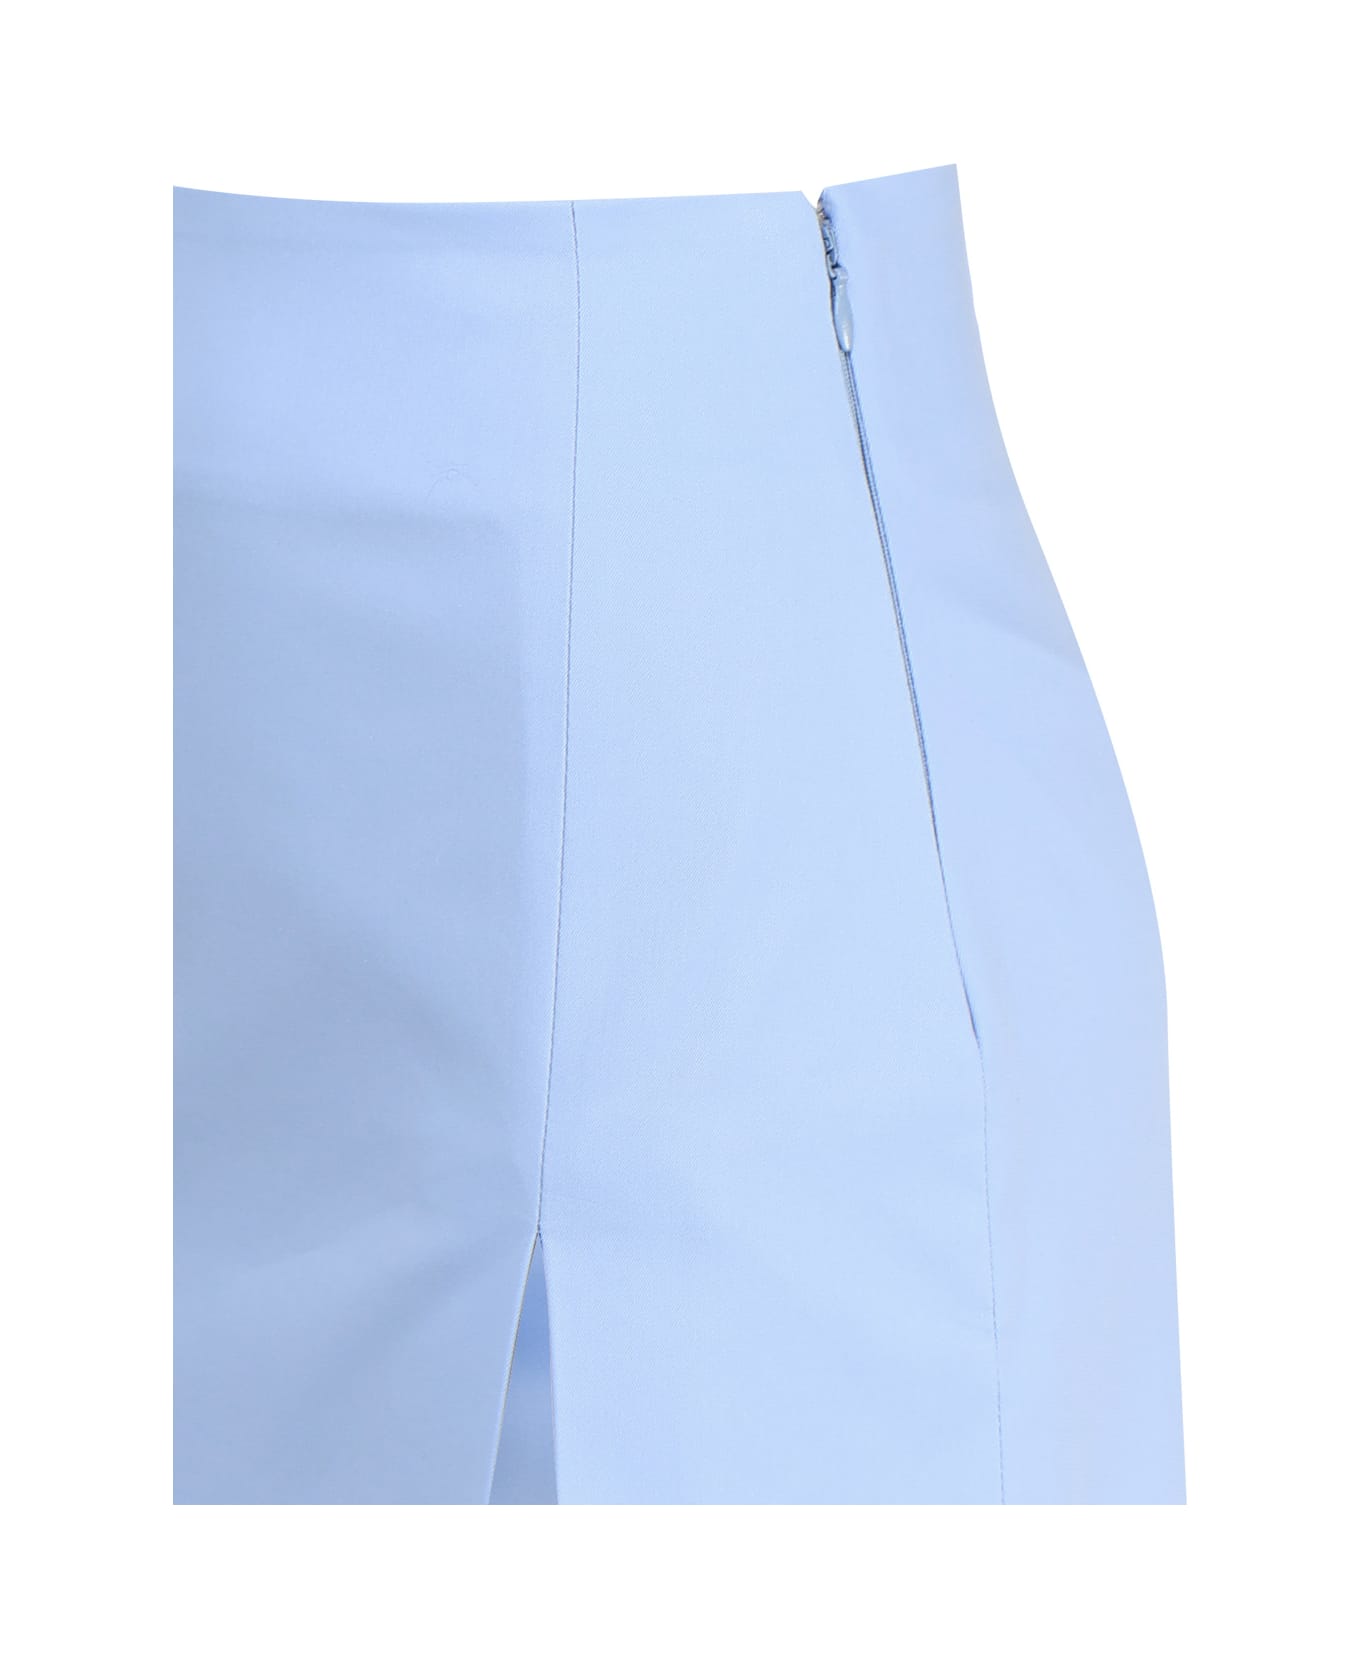 The Andamane Gioia Miniskirt With Side Slit - Light blue